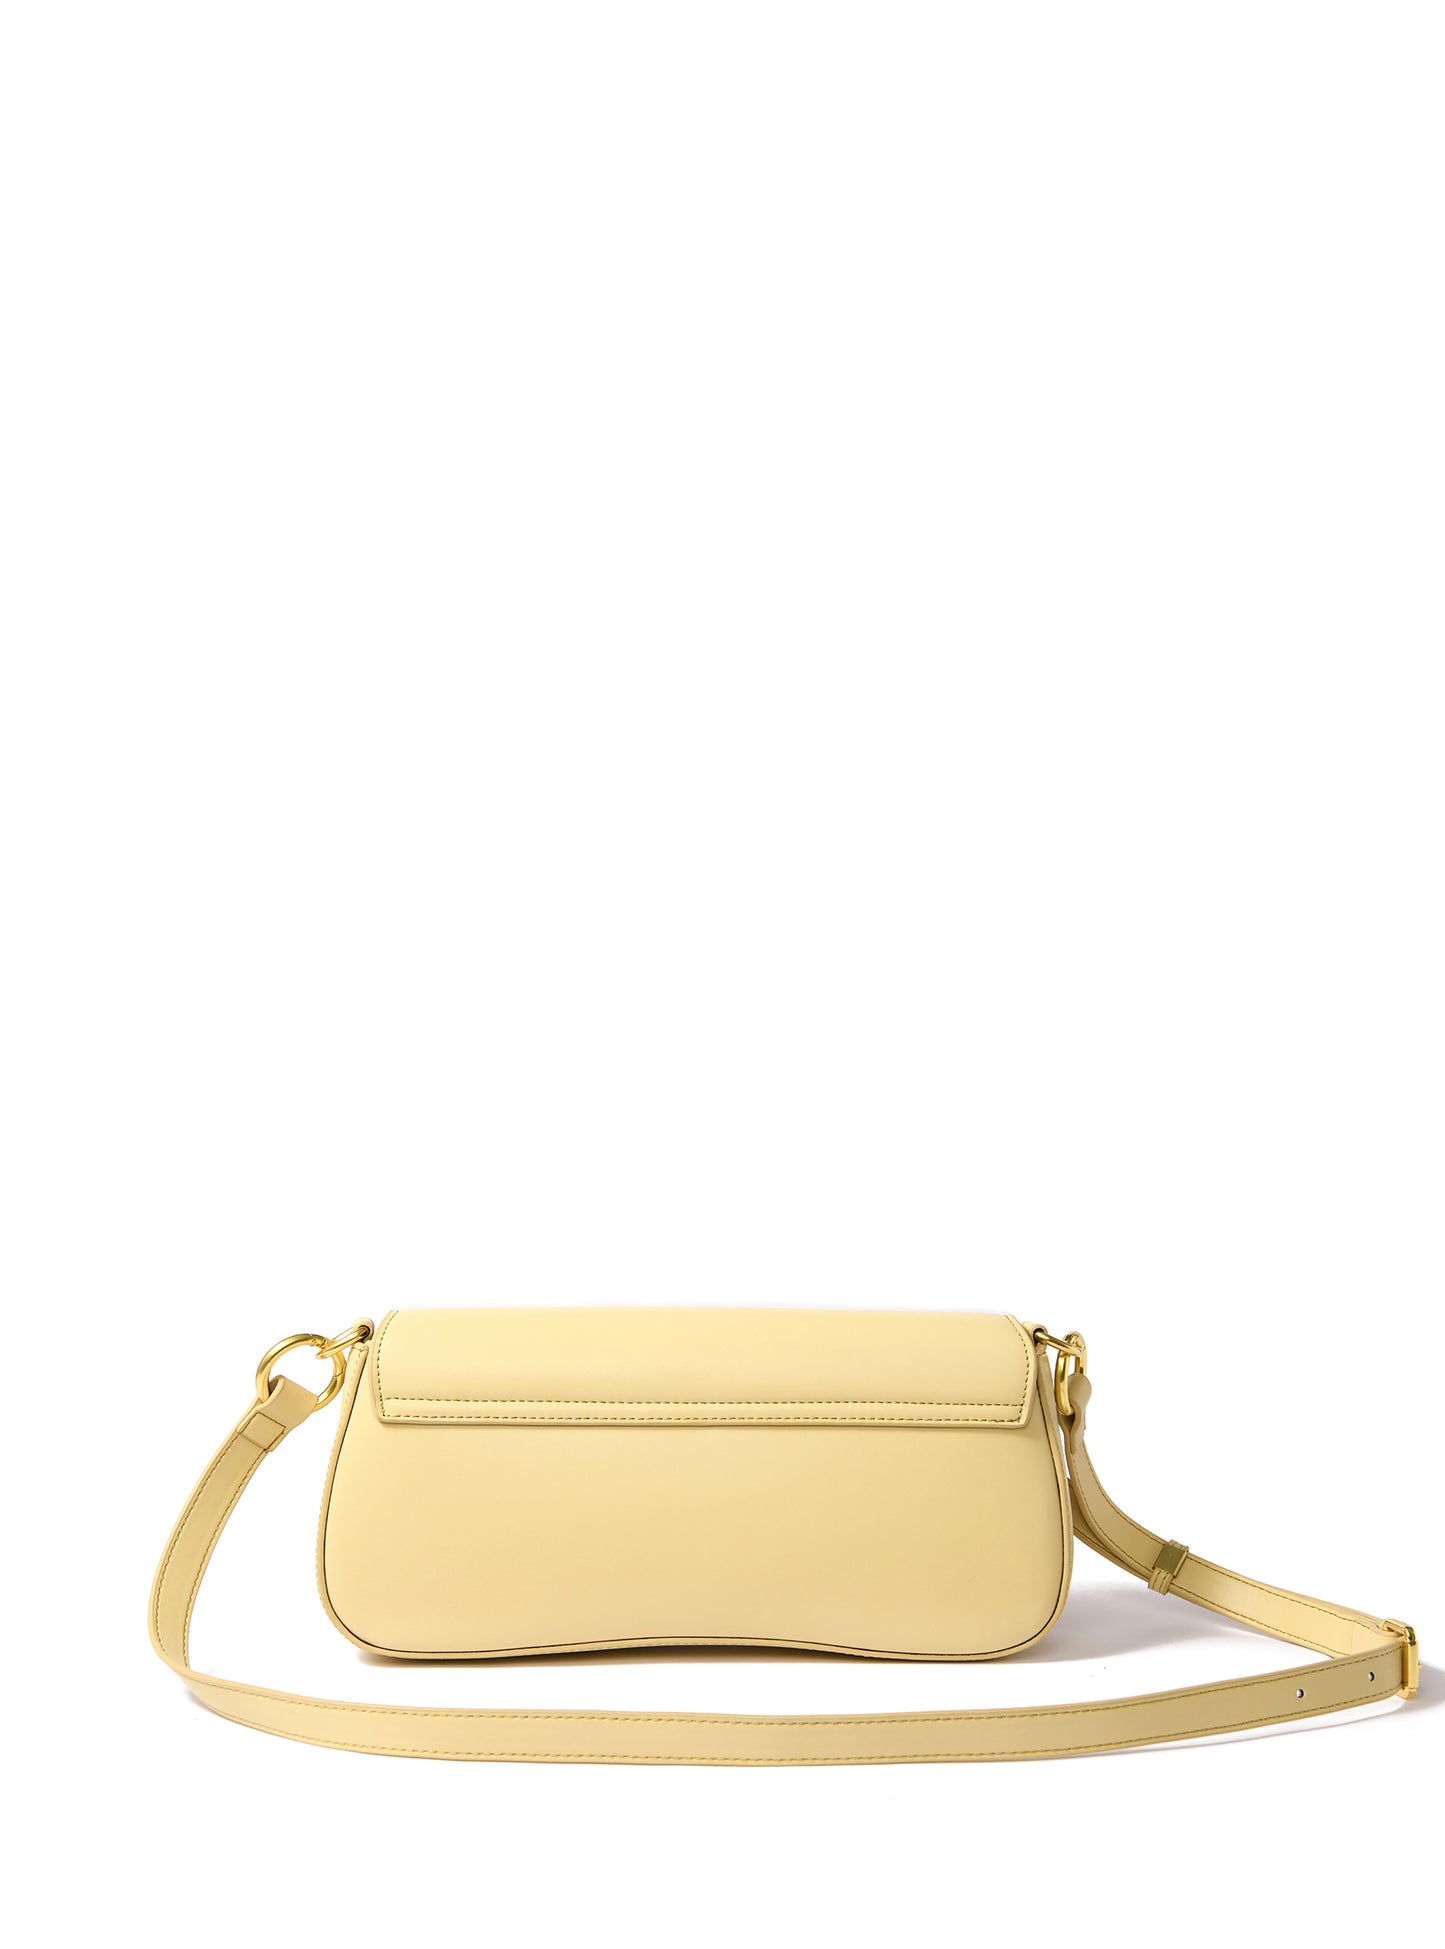 Jacqueline Leather Bag, Yellow